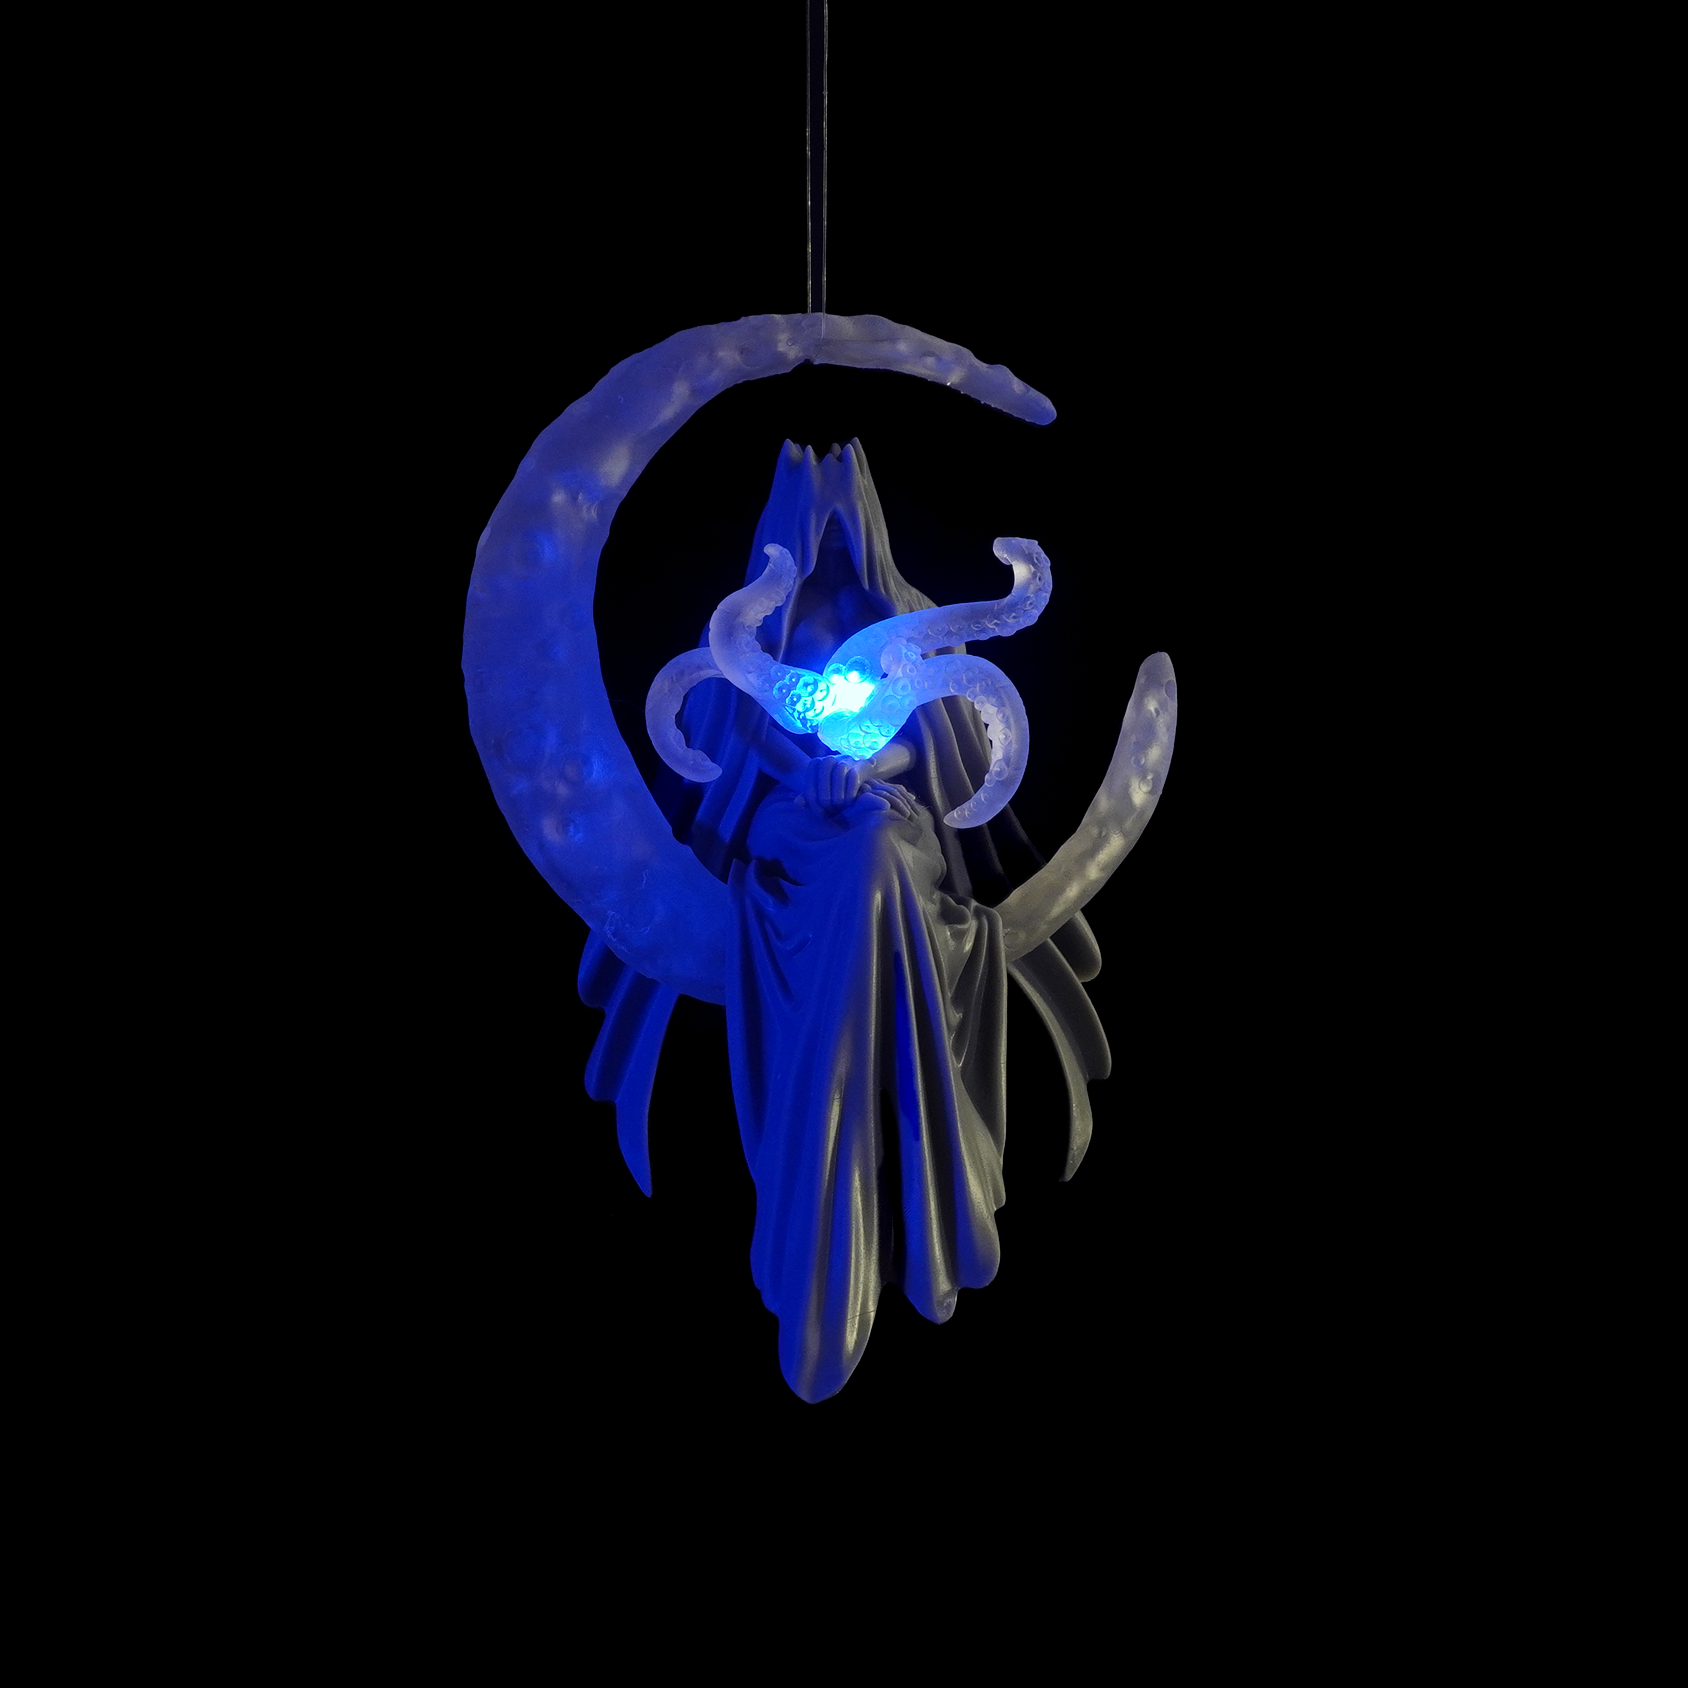 Moon Queen - Arcane Ornaments